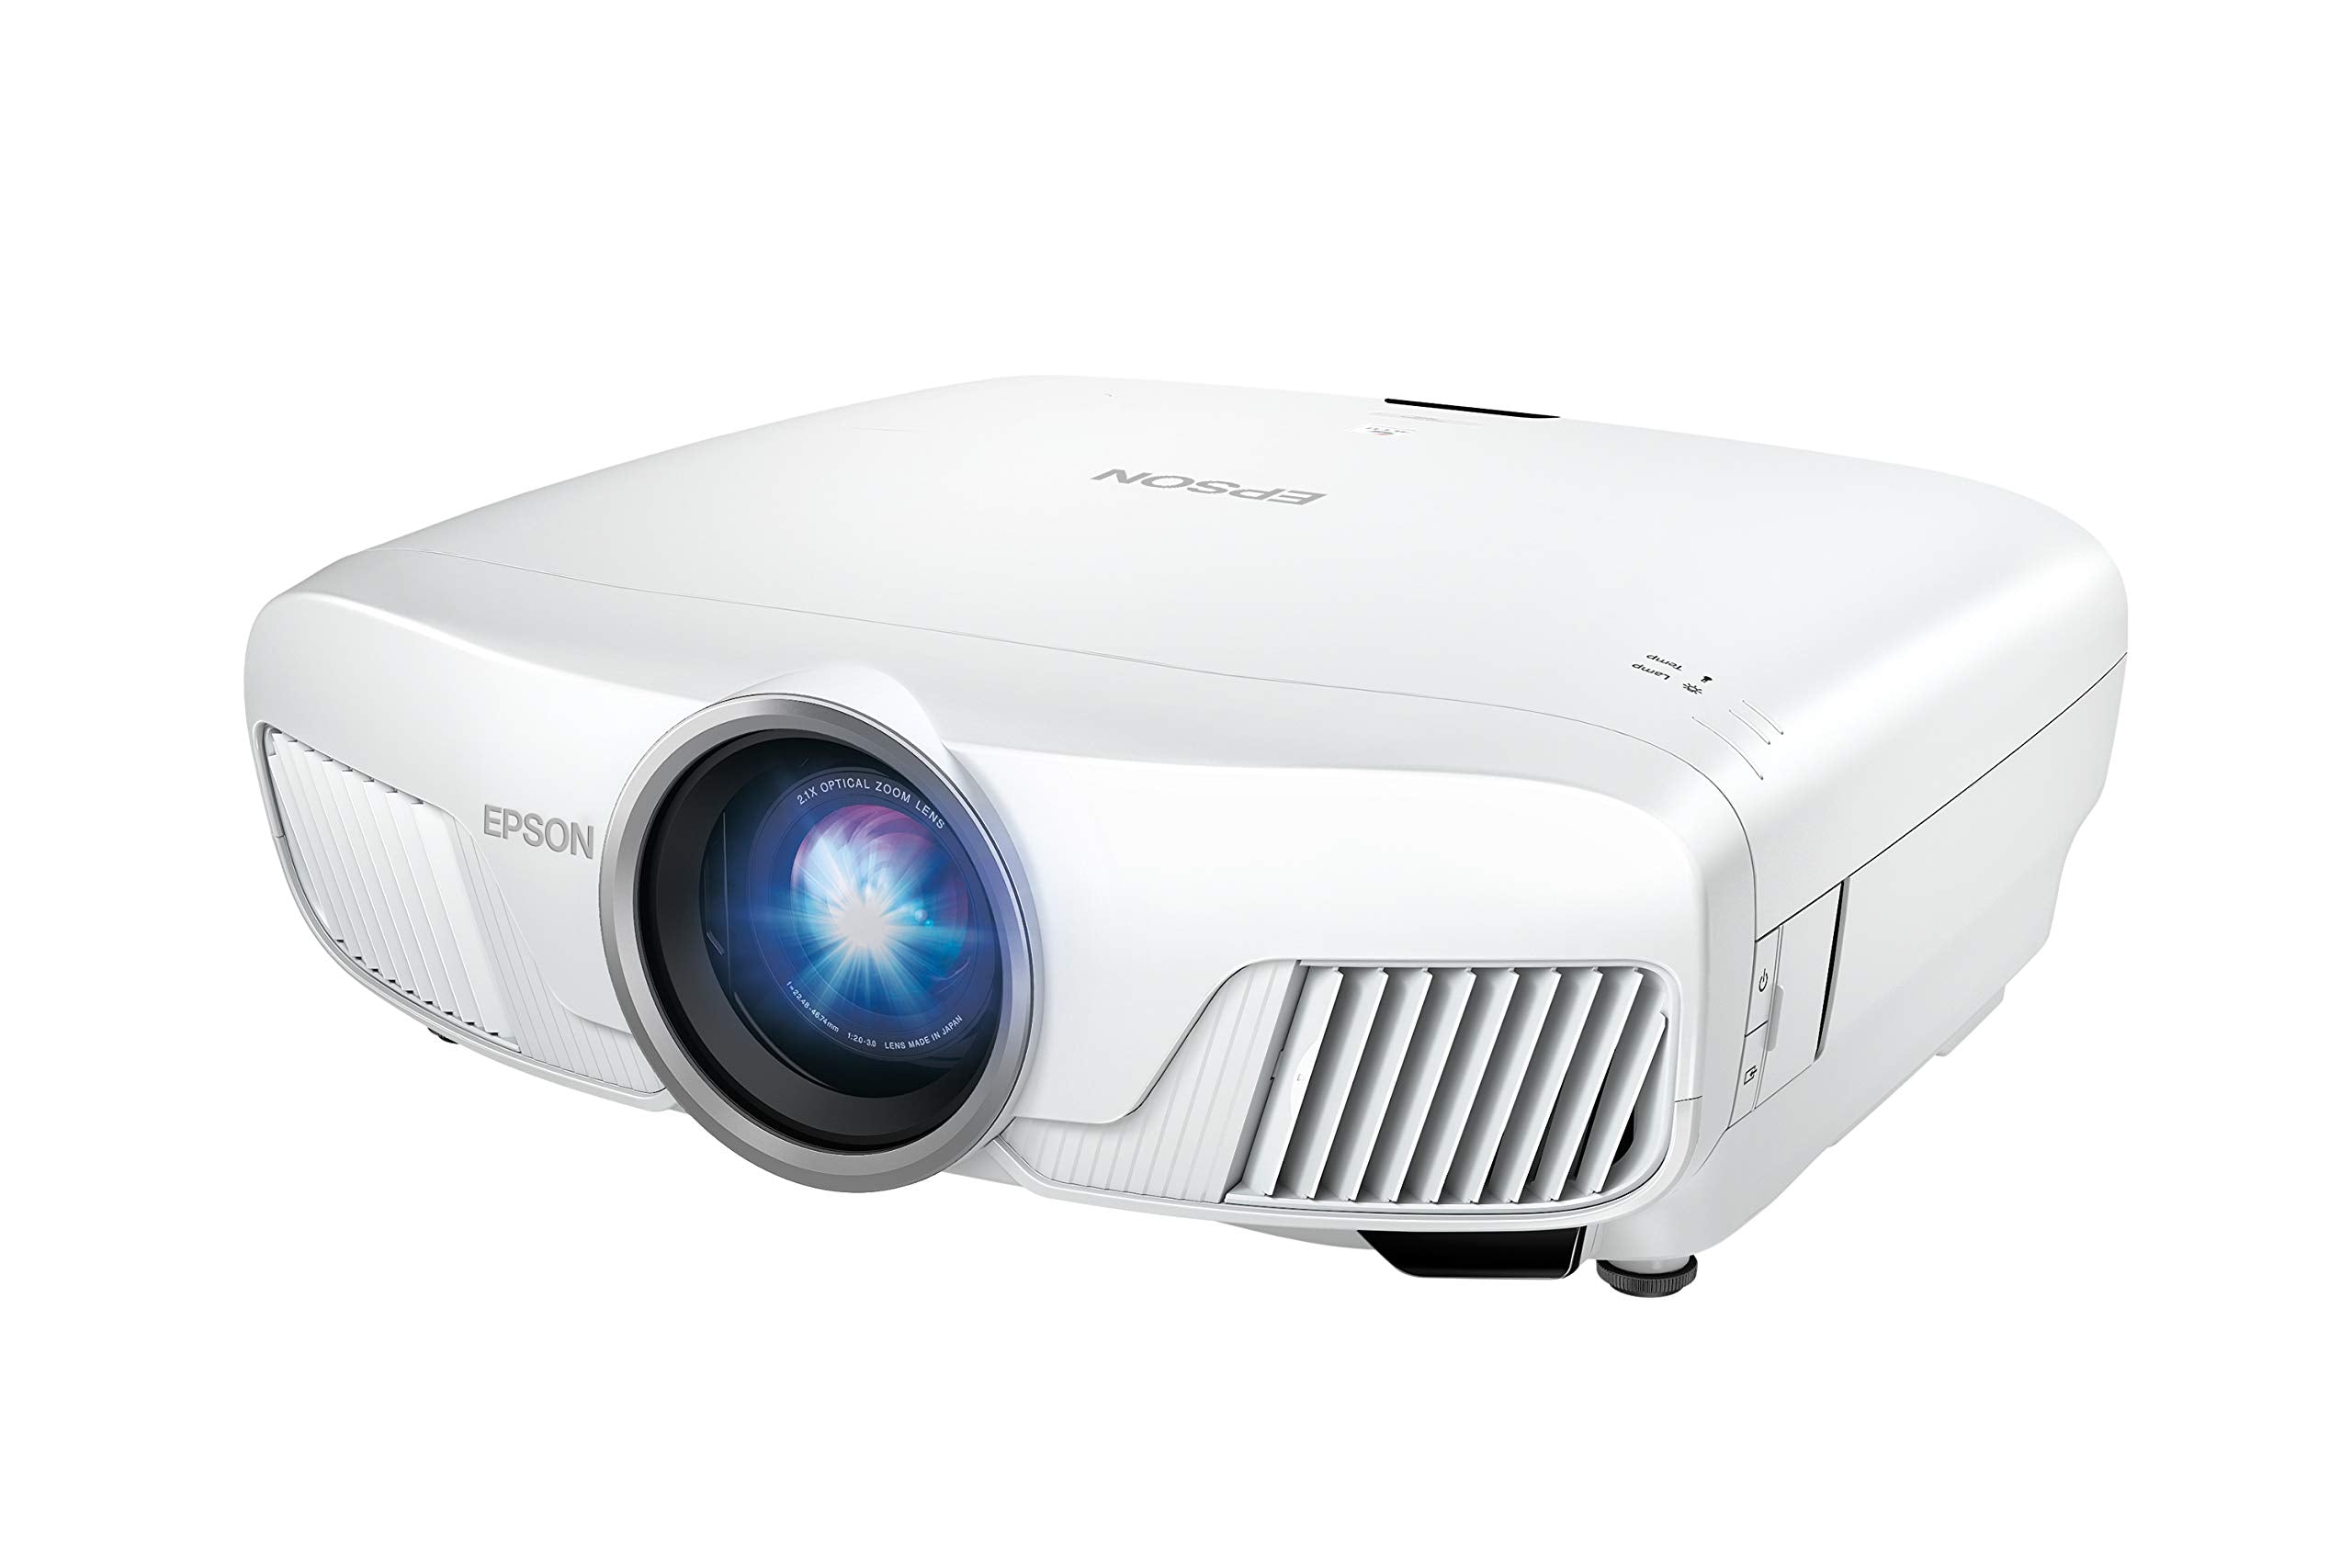 Epson Home Cinema 4010 4K PRO-UHD (1) 3-Chip Projector